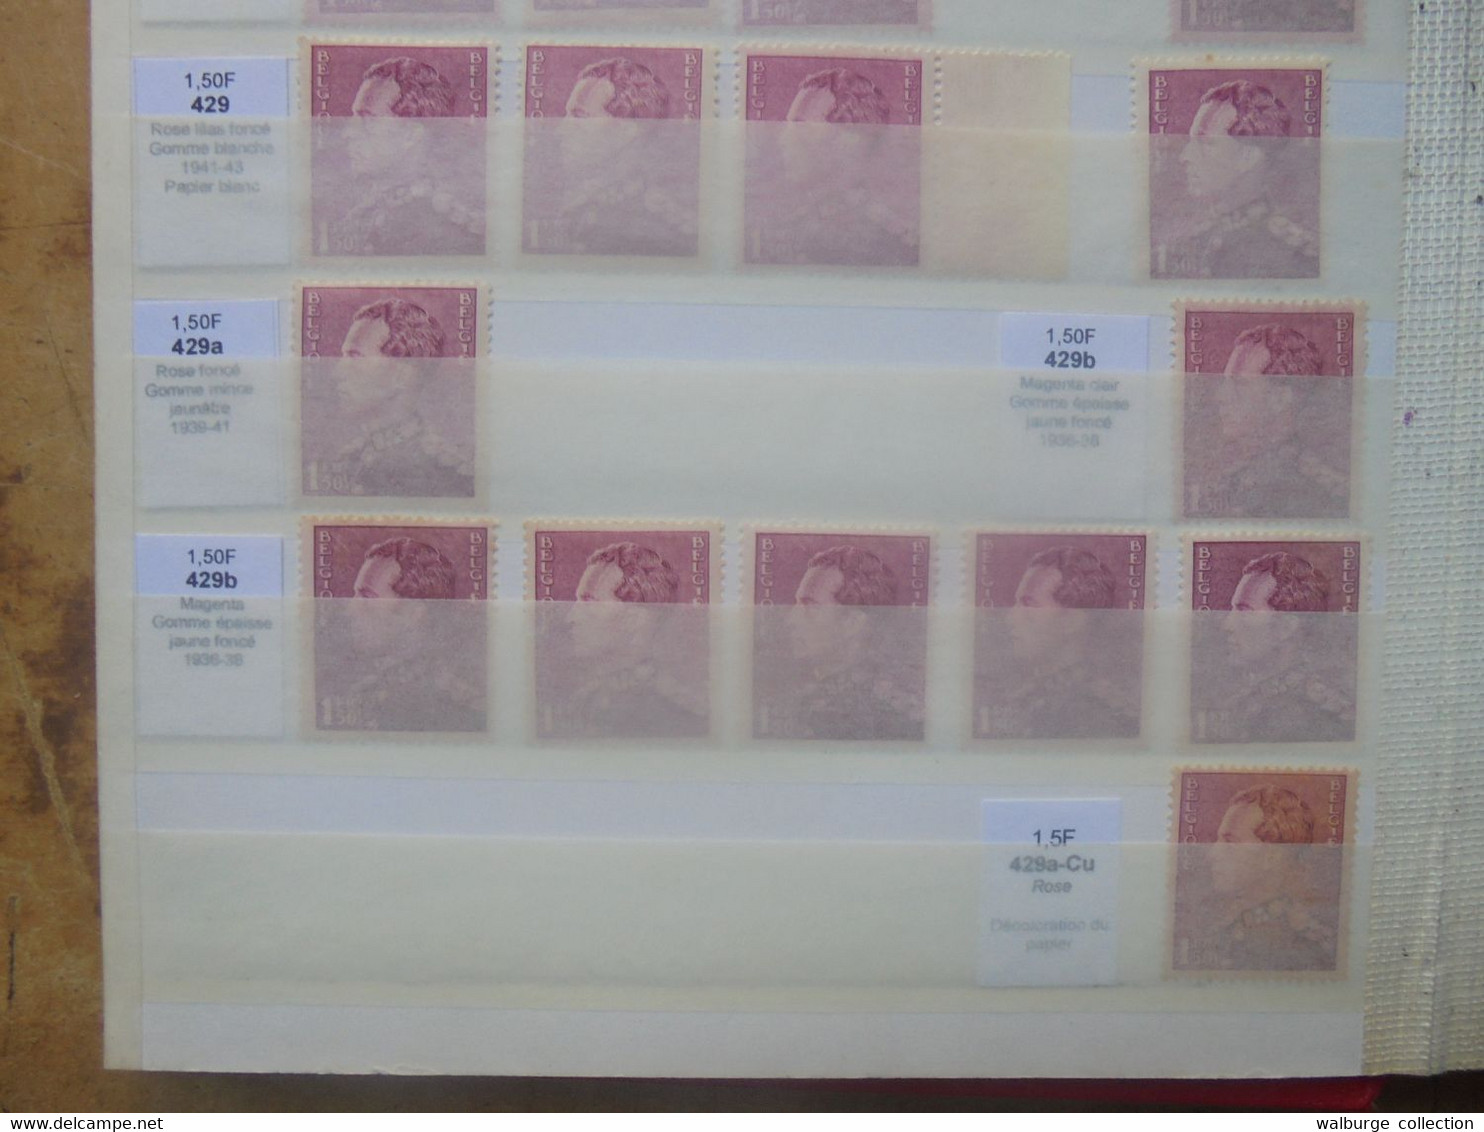 BELGIQUE "POORTMAN" BELLE ETUDE MAJORITES NEUVE XX  (RH.10) 600 Grammes - Collections